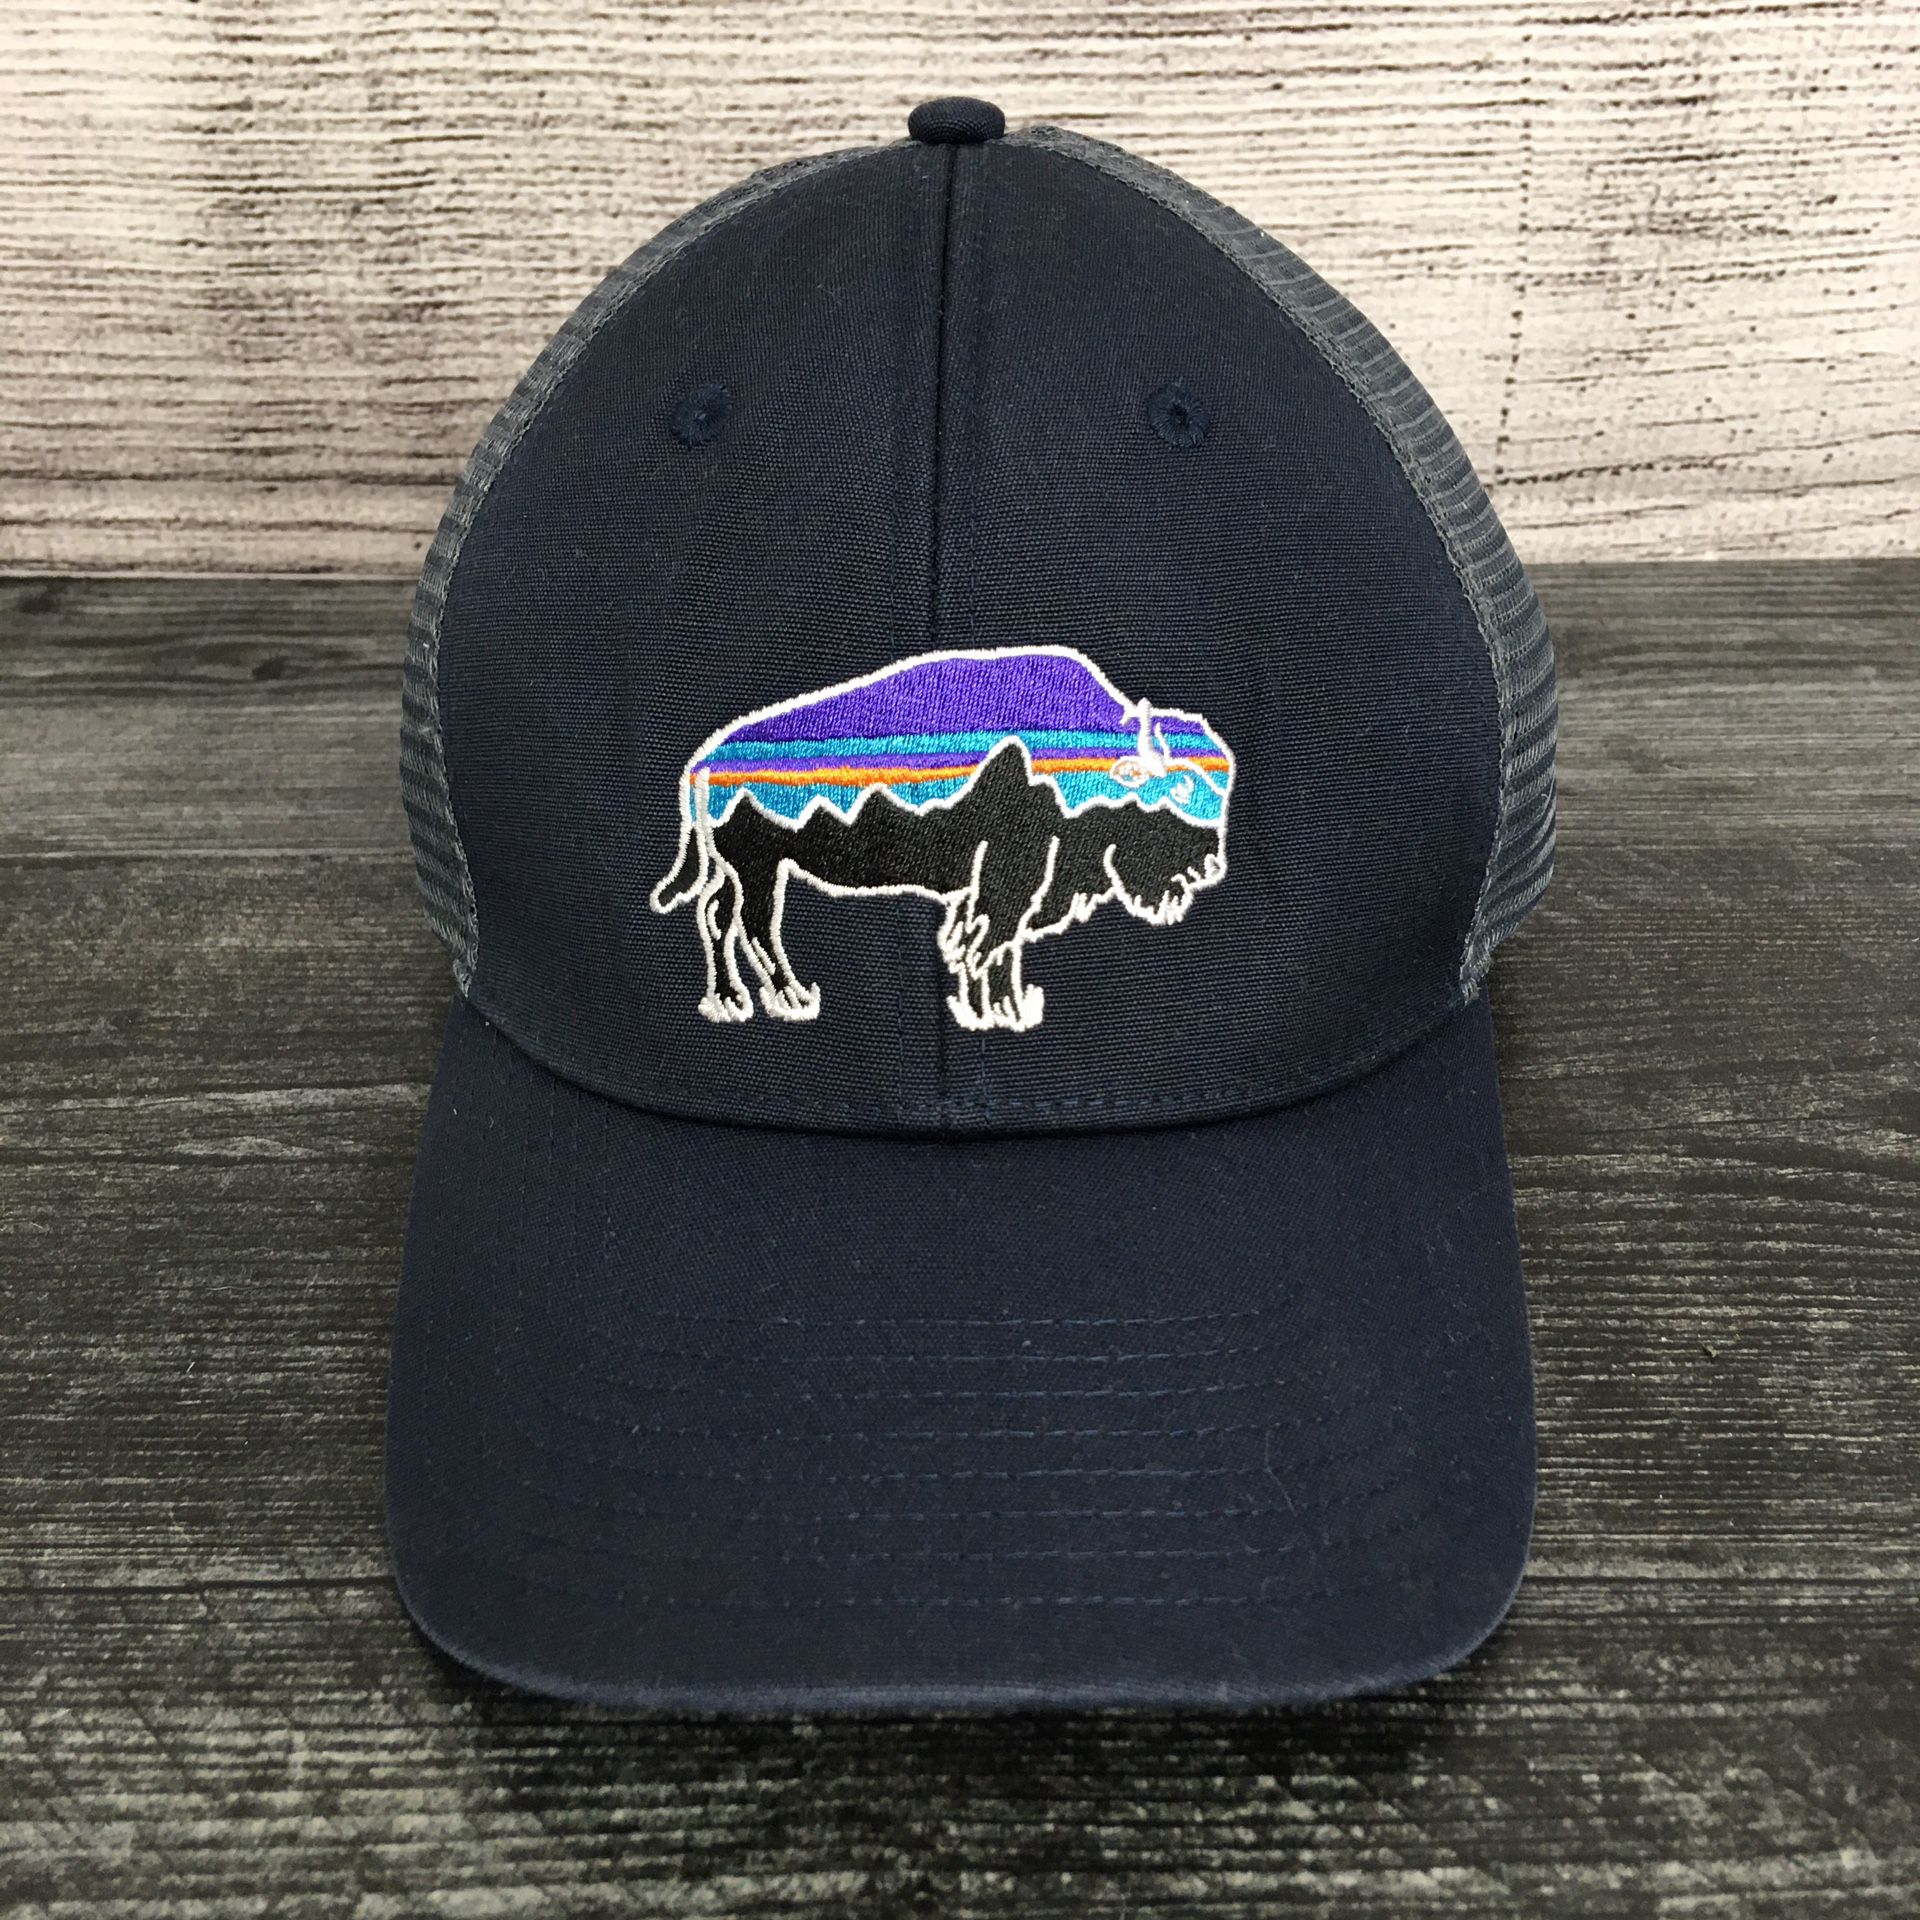 Navy Blue Patagonia Bison SnapBack Hat